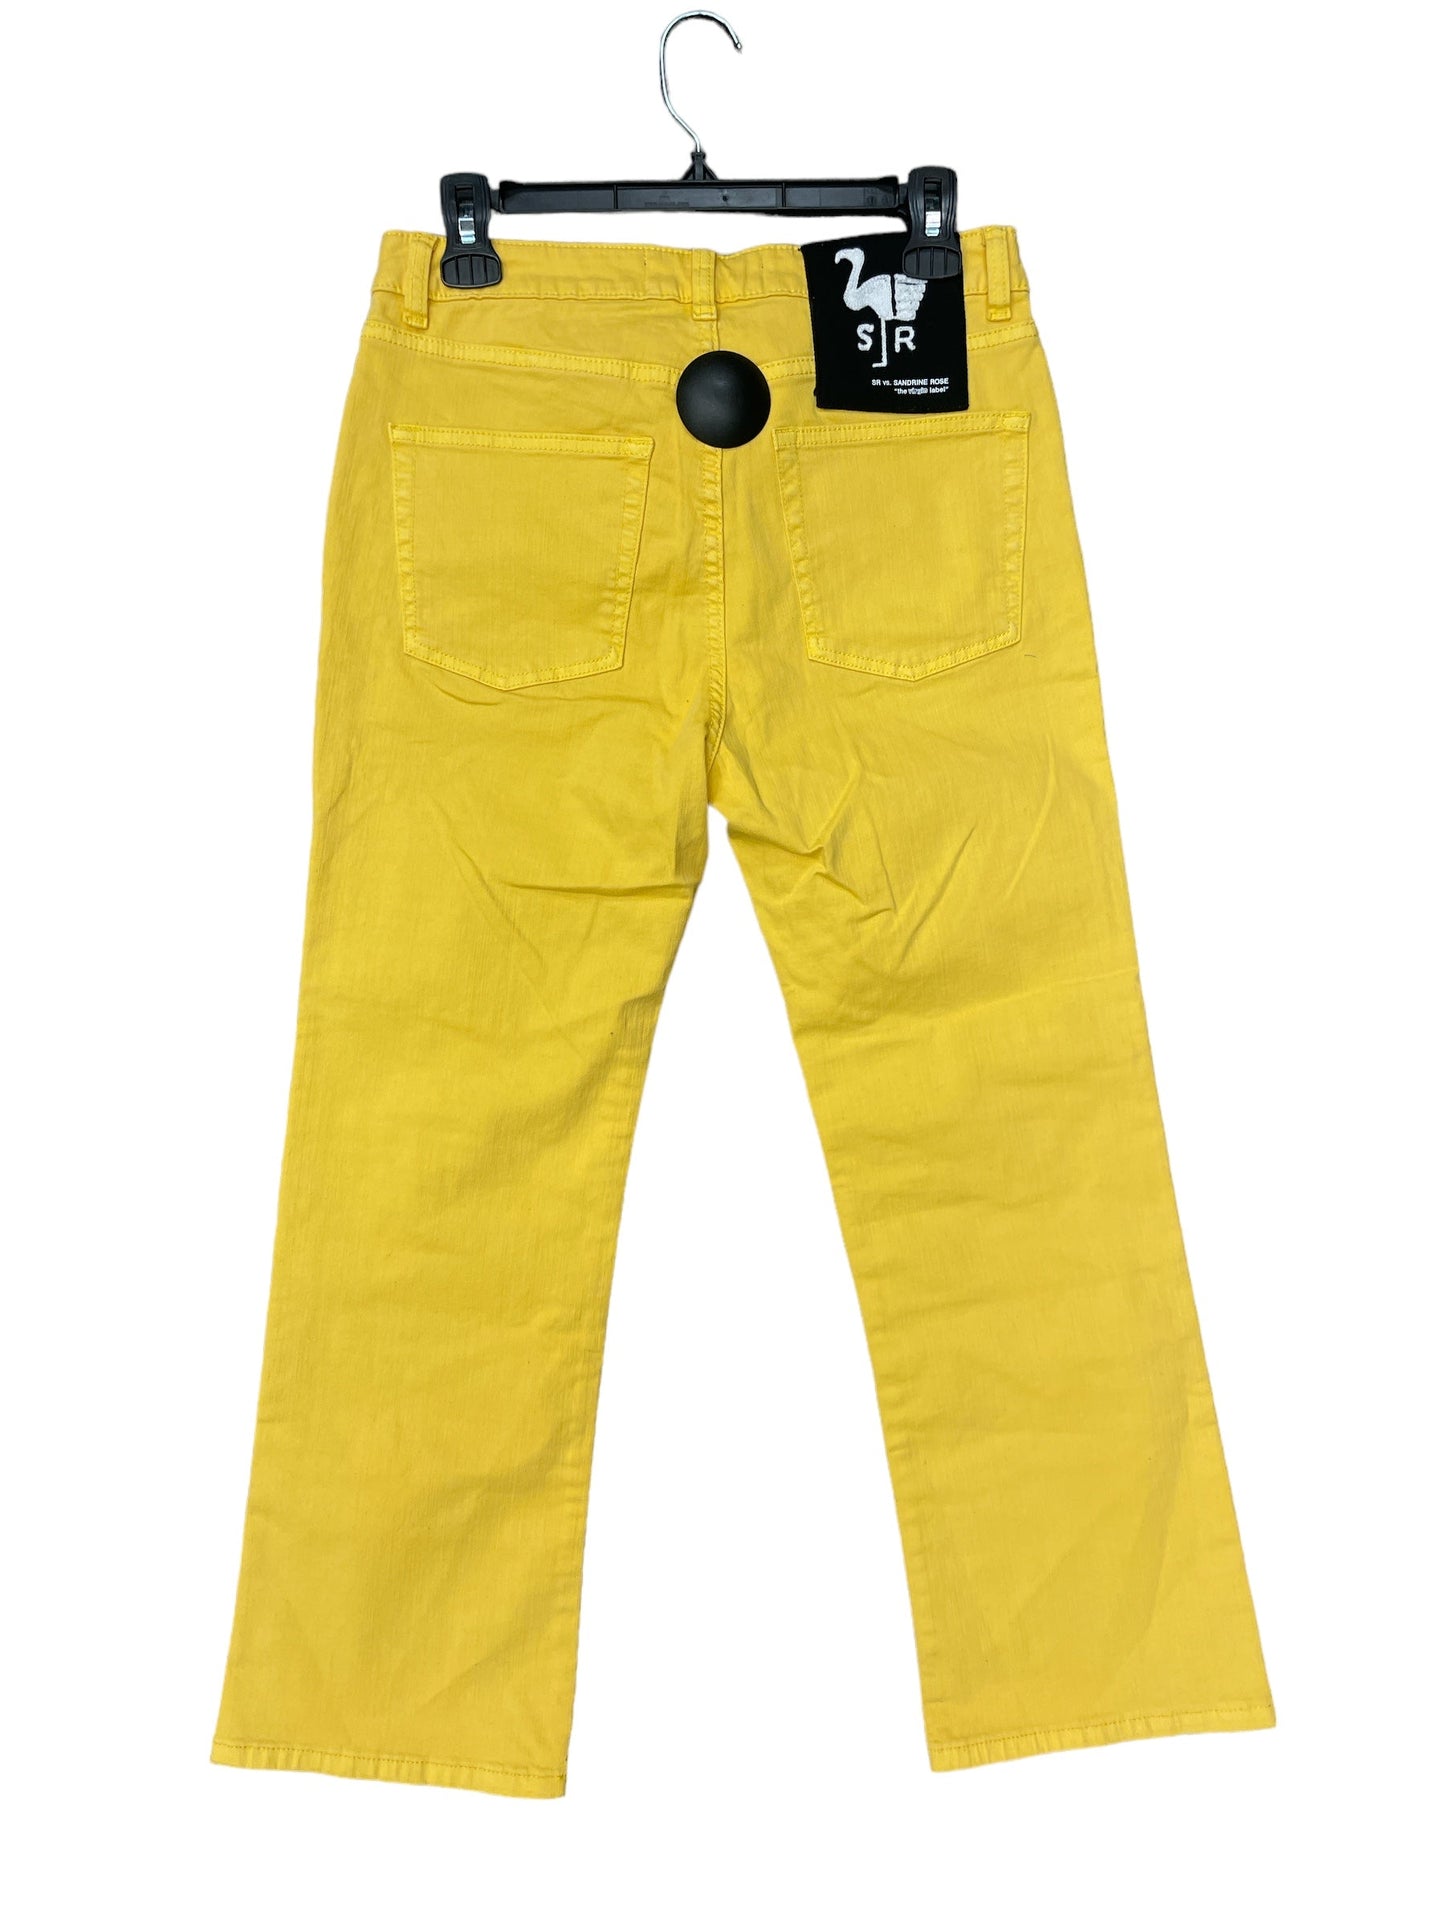 Pants Designer By Cmc  Size: 6